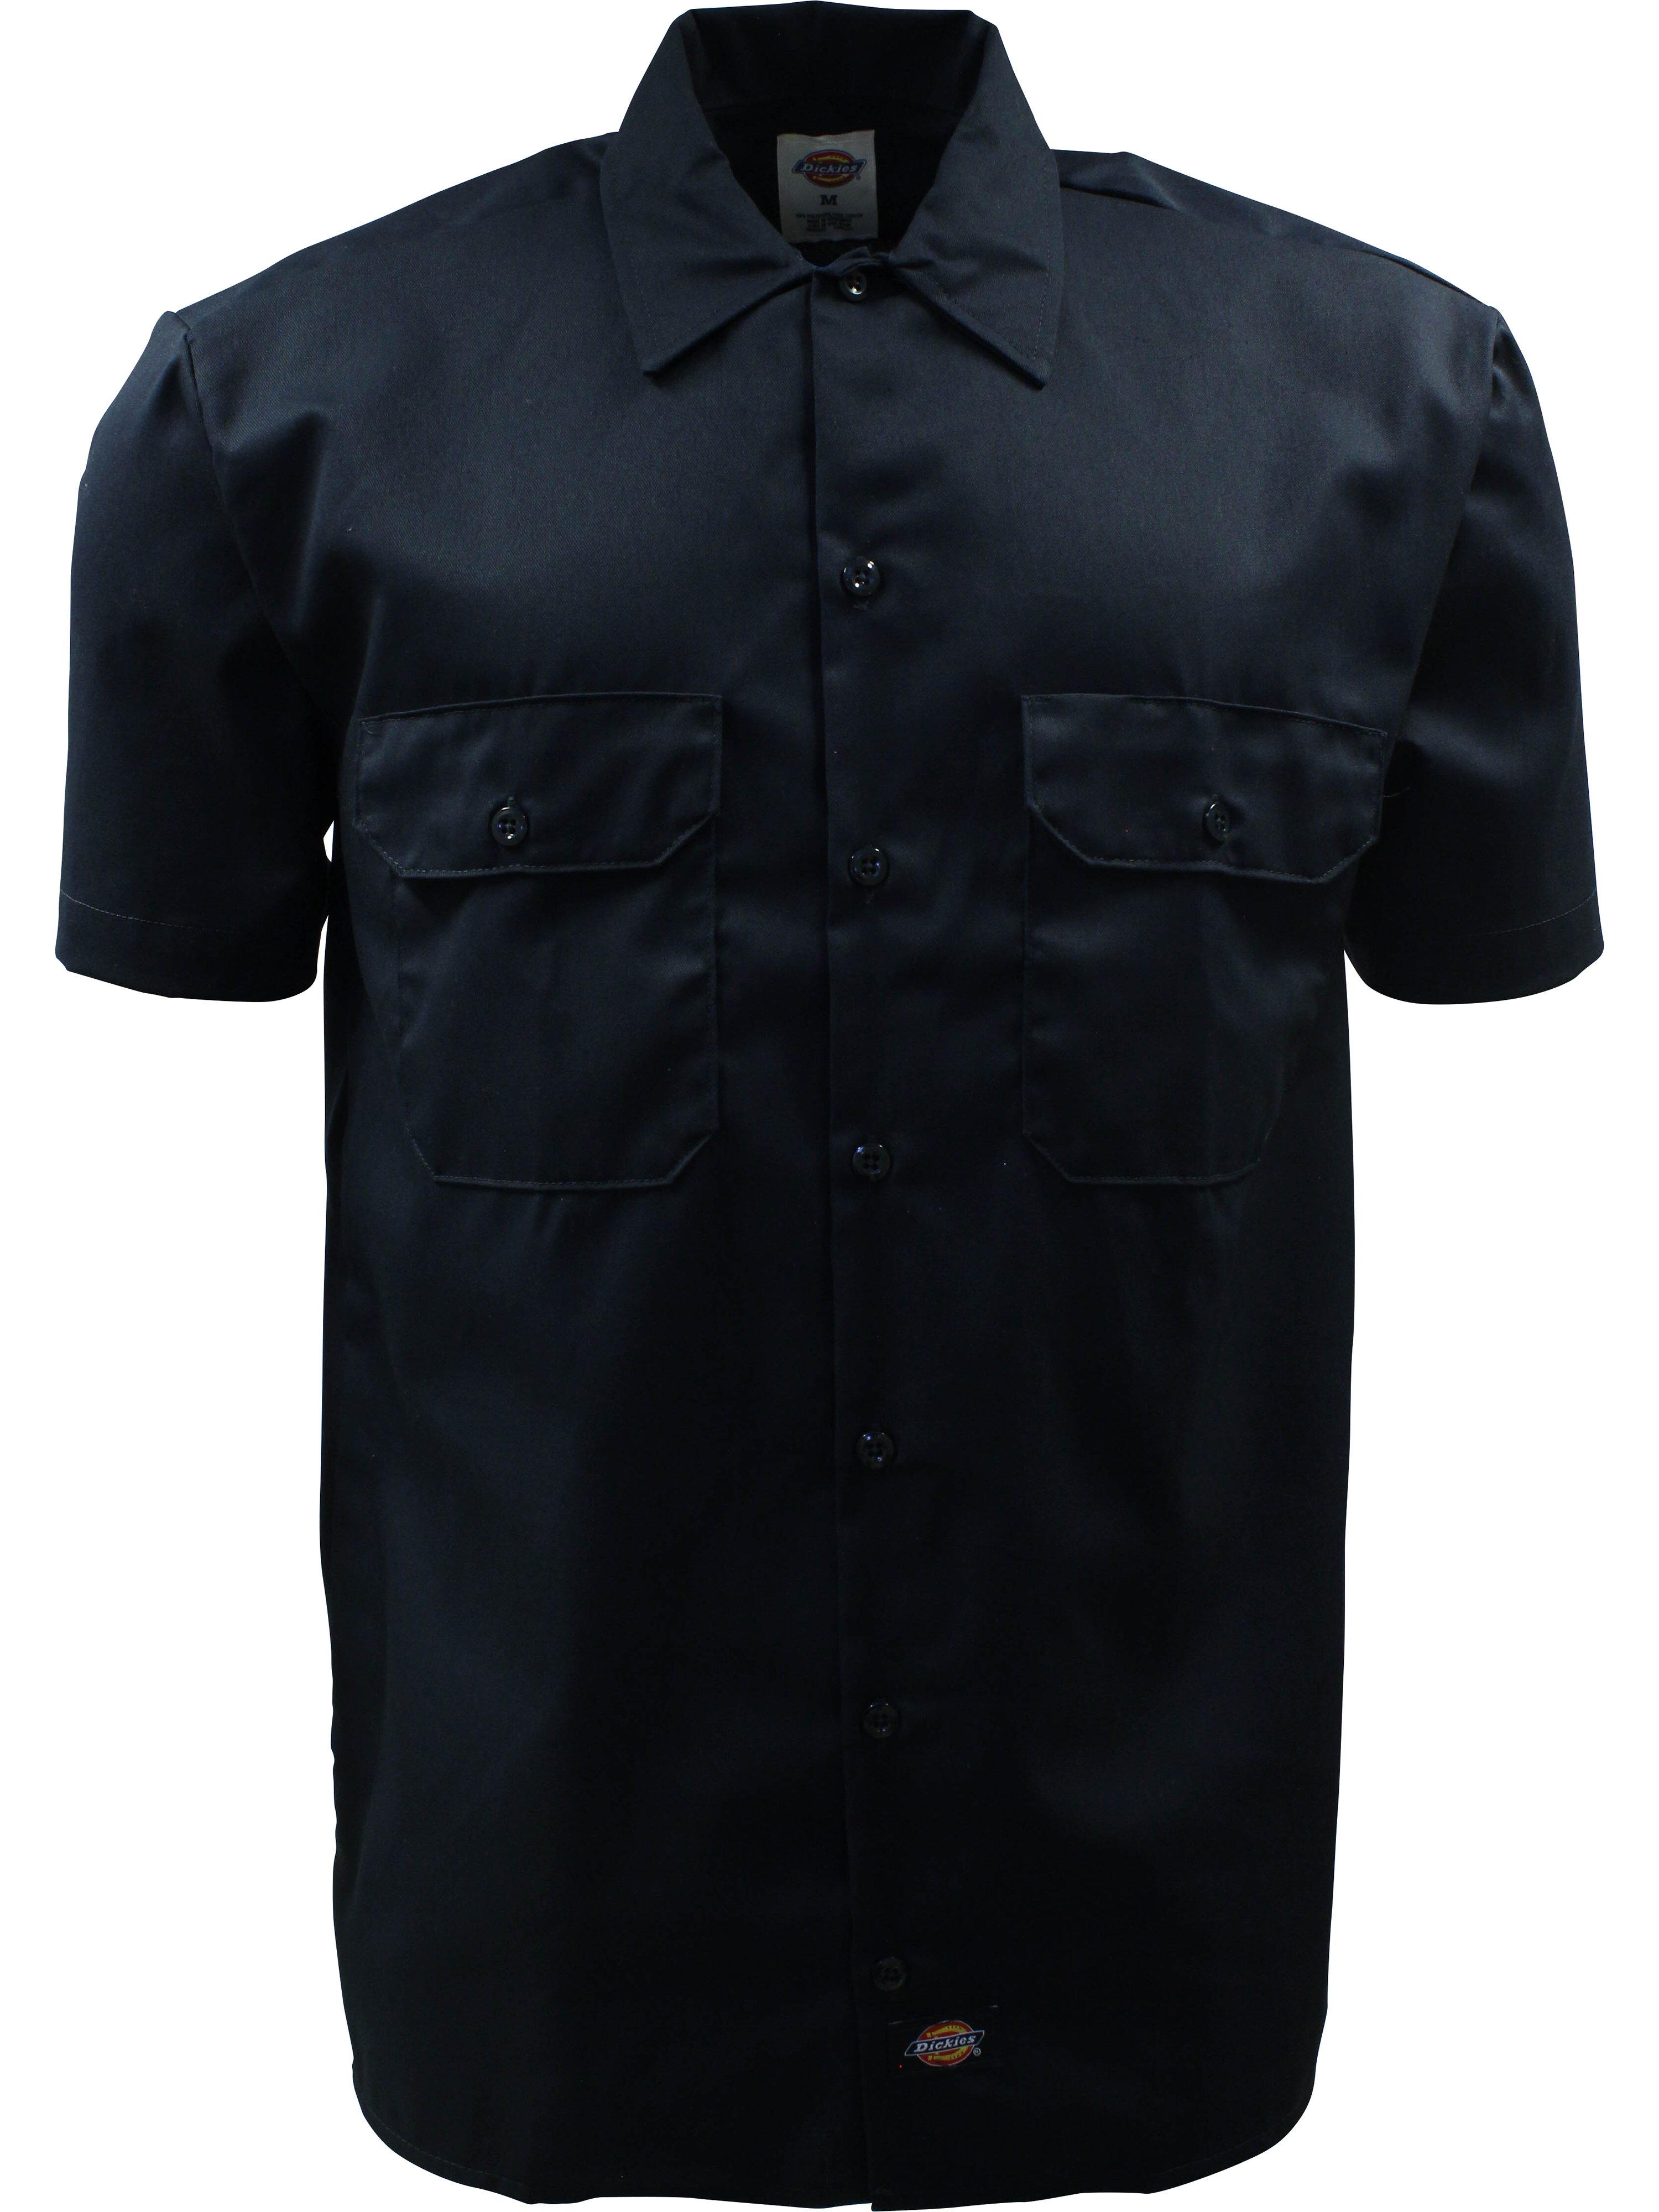 Buy Dickies '1574 Work' Shirt - Dark Navy